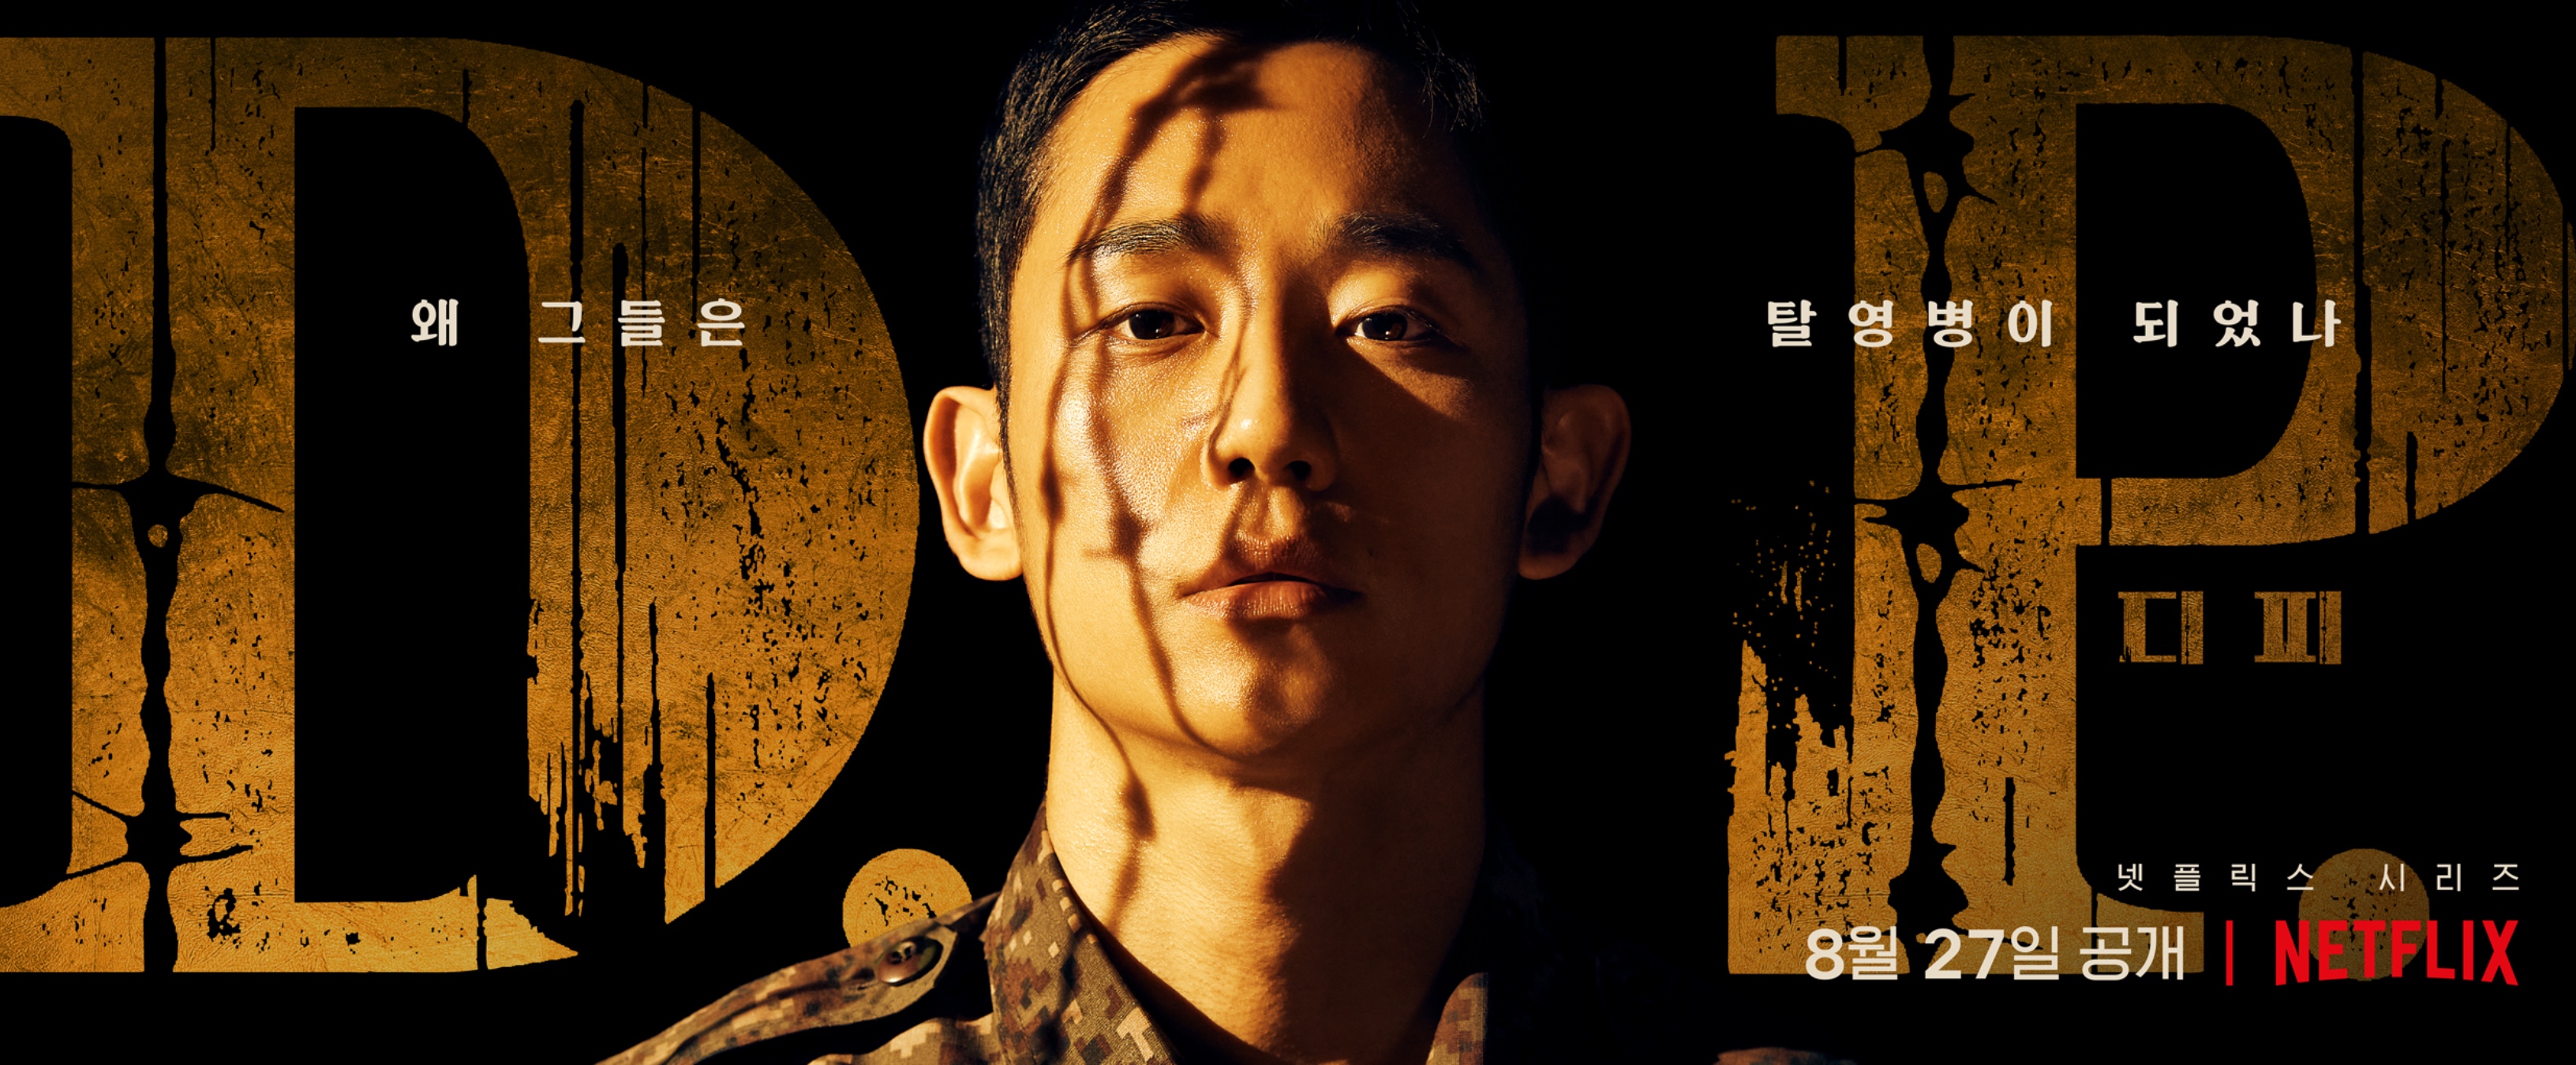 Jung Hae-In as Ahn Jun-Ho in 'D.P.' K-drama wearing army uniform